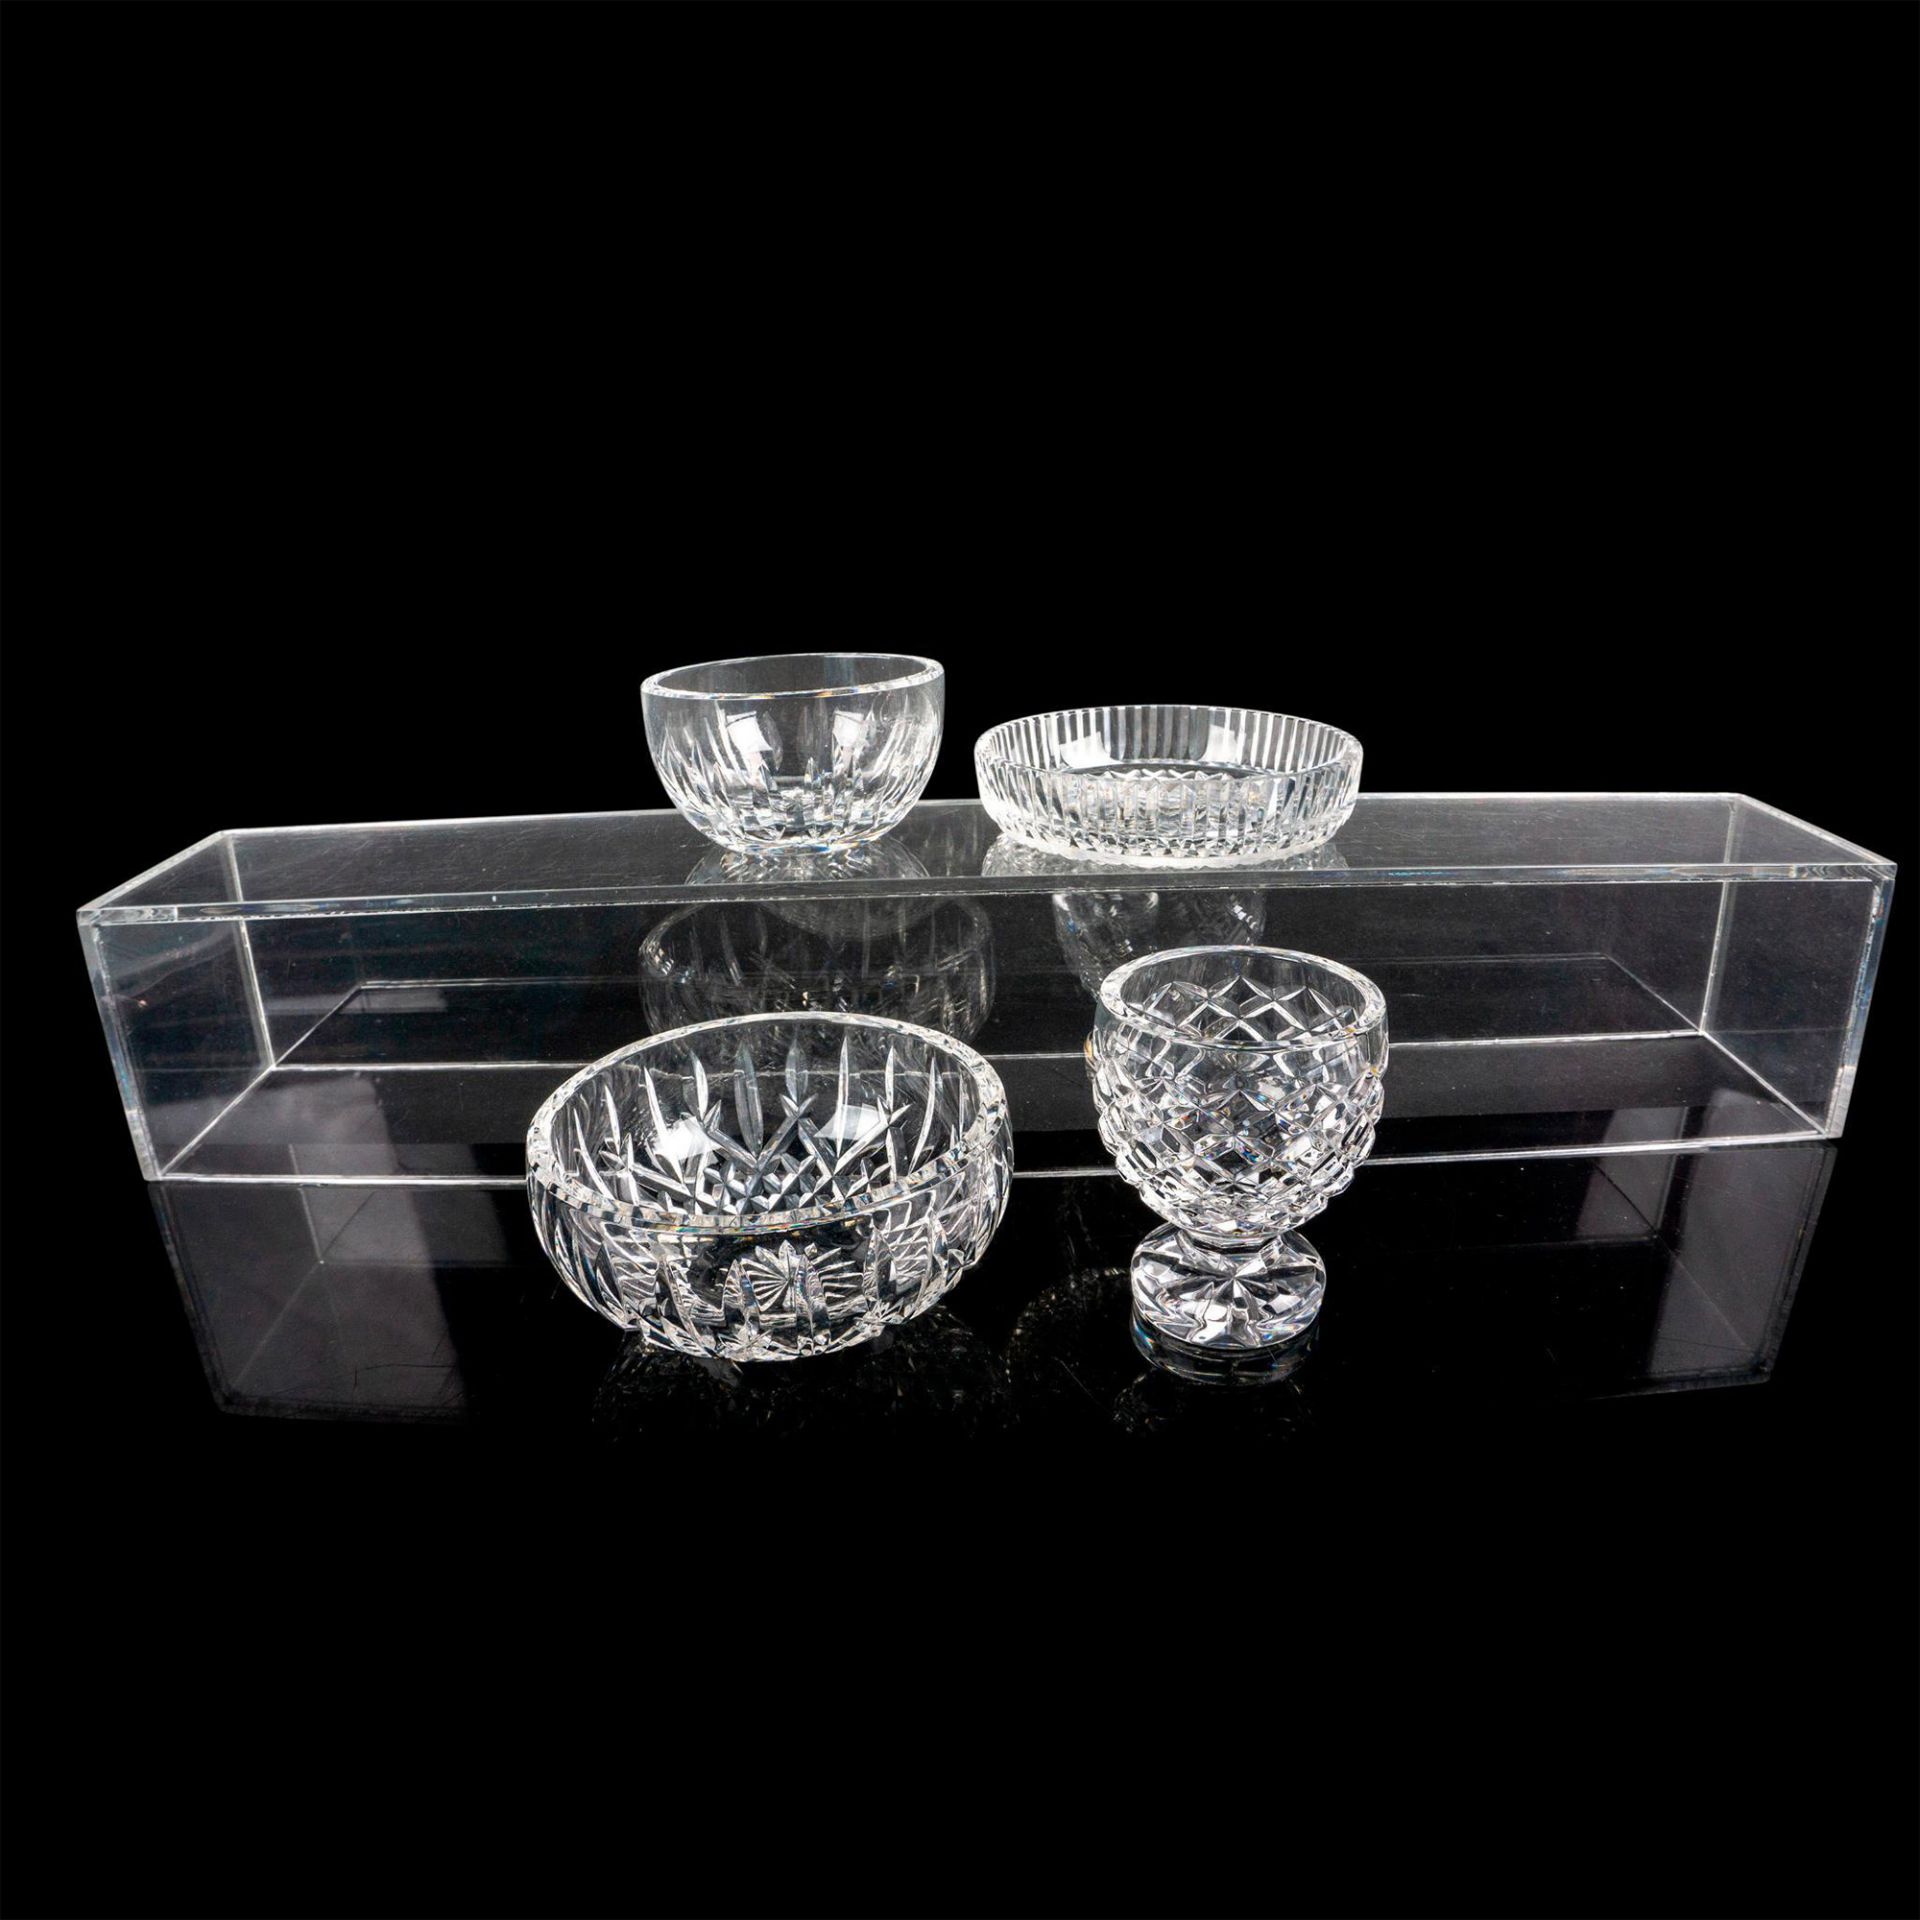 4pc Waterford Crystal Tableware - Image 2 of 4